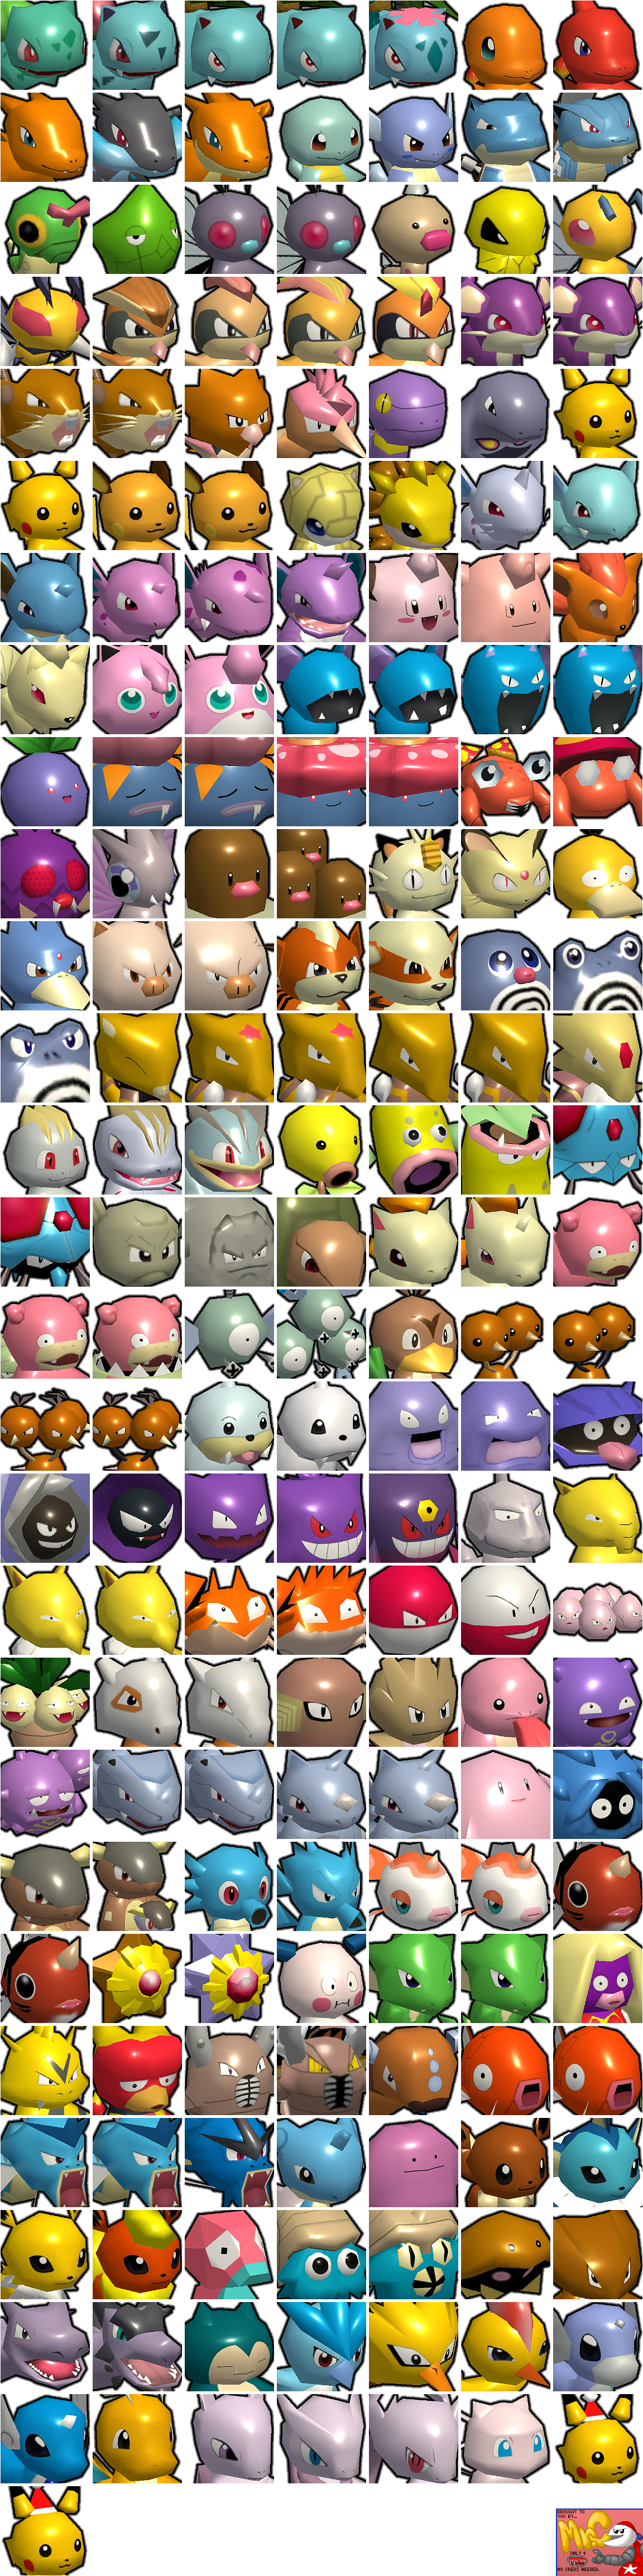 Pokémon Rumble Rush - Pokémon Icons (1st Generation)